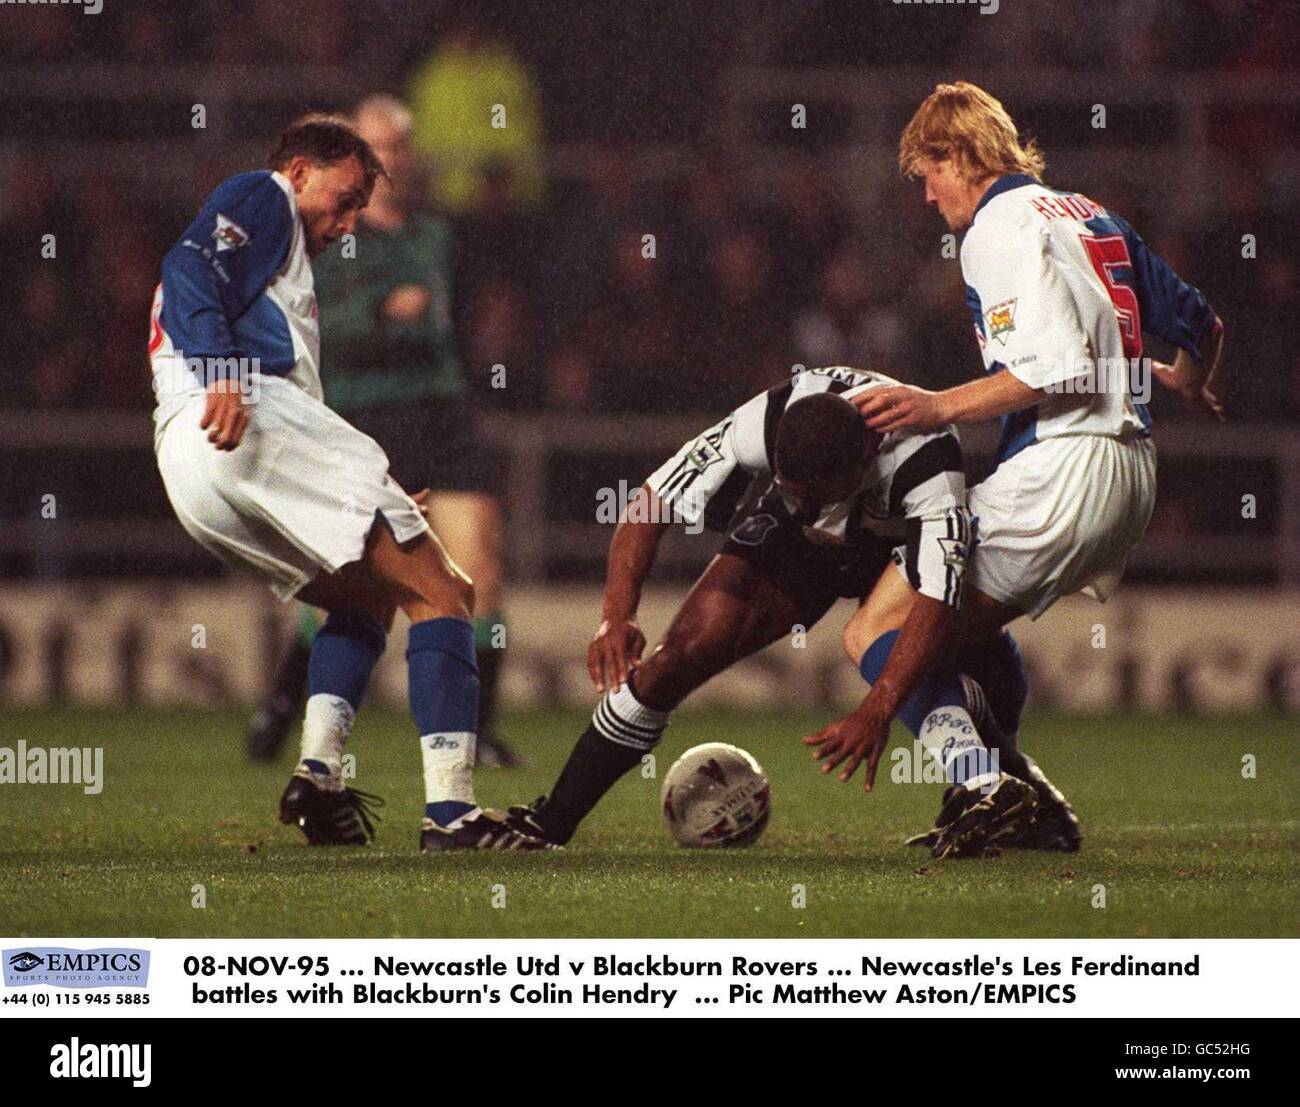 08-NOV-95, Newcastle United v Blackburn Rovers, Newcastle's Les Ferdinand battles with Blackburn's Colin Hendry, Pic Matthew Aston/EMPICS Stock Photo